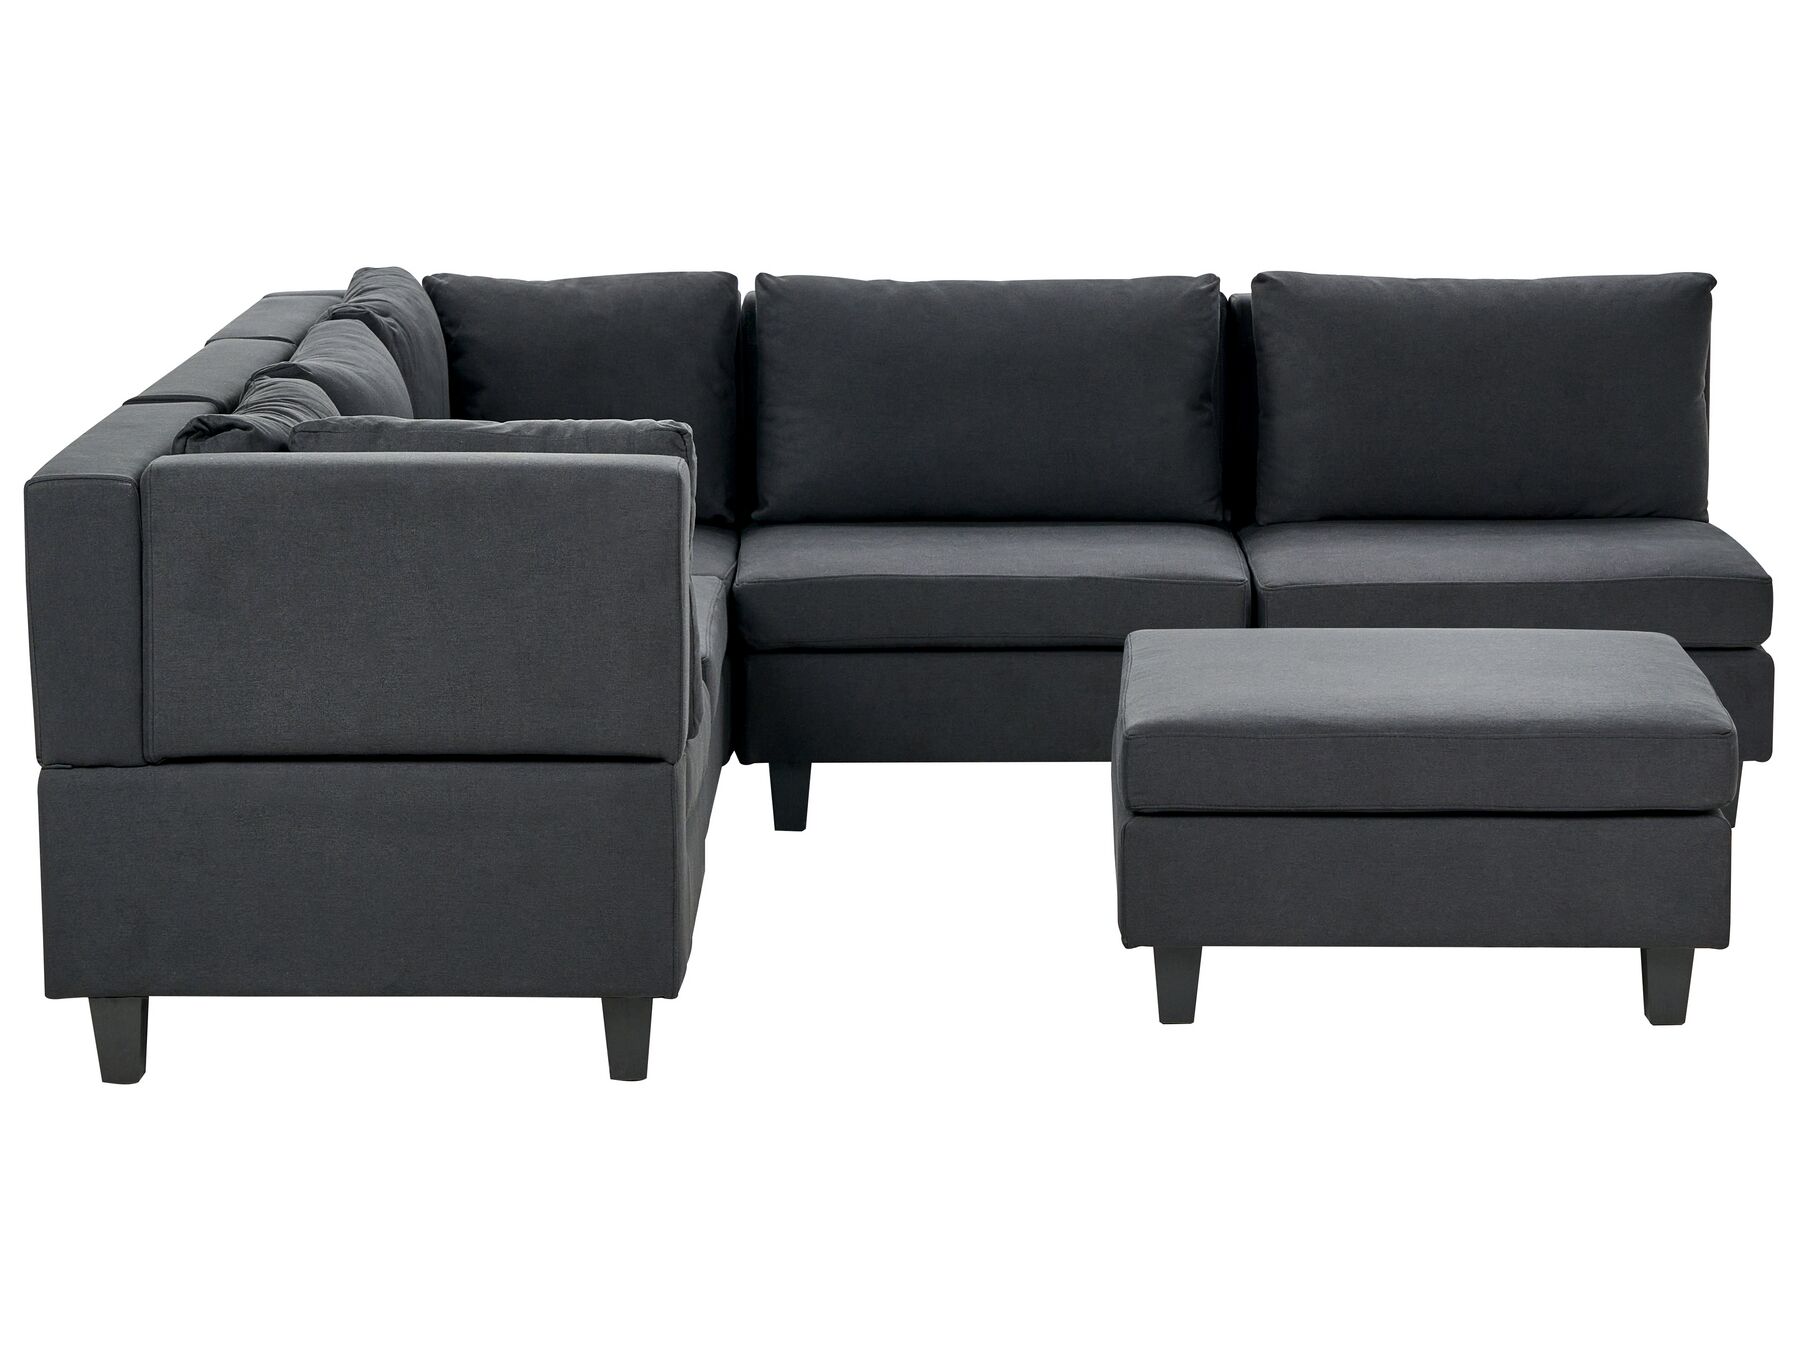 5 Seater Modular Fabric Corner Sofa with Ottoman Black UNSTAD_924812